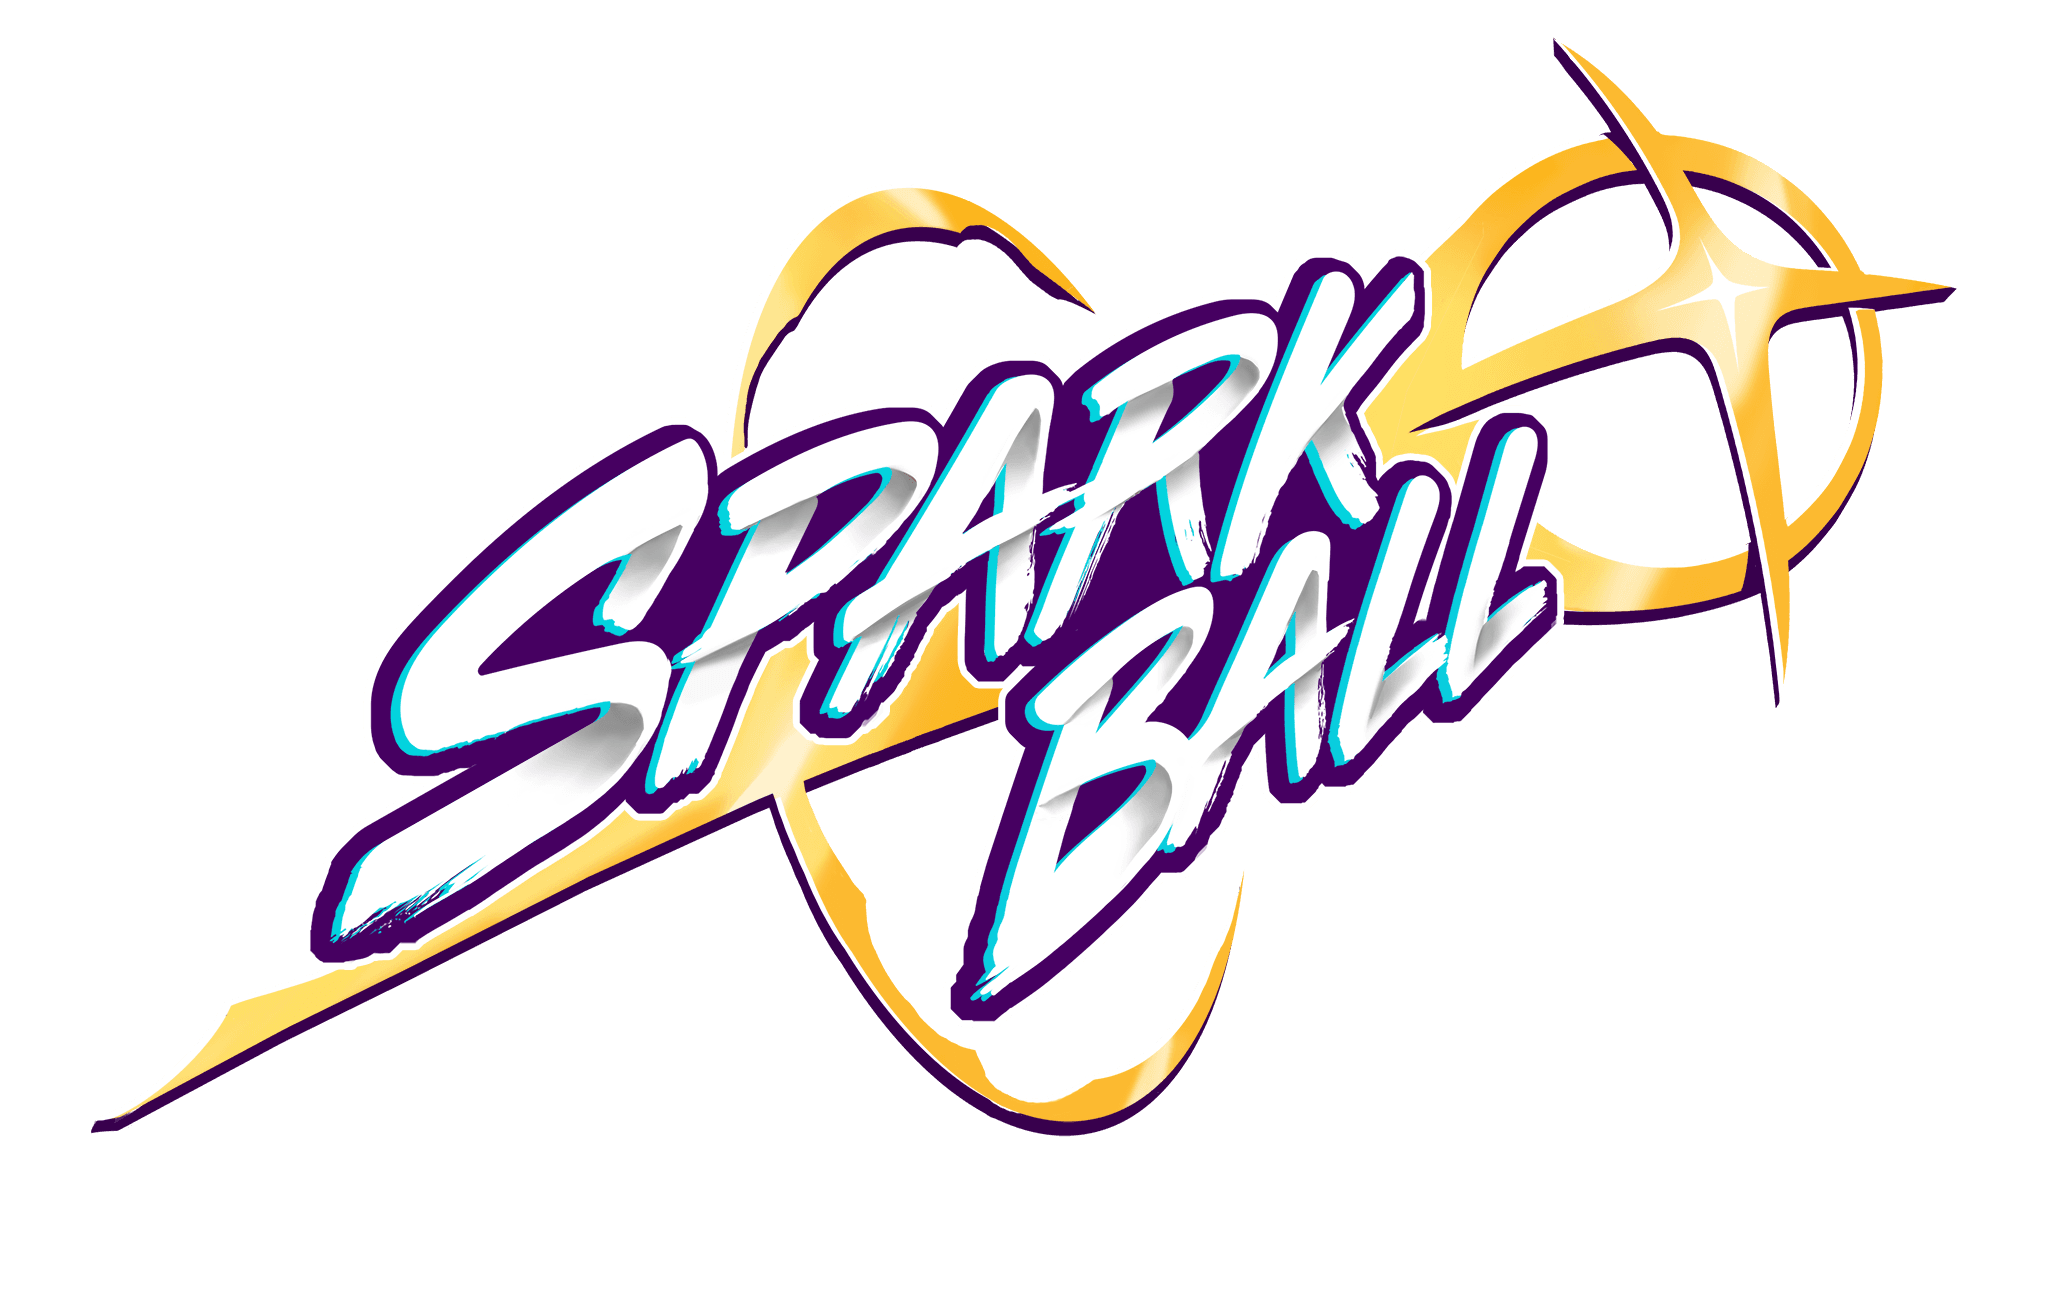 Sparkball